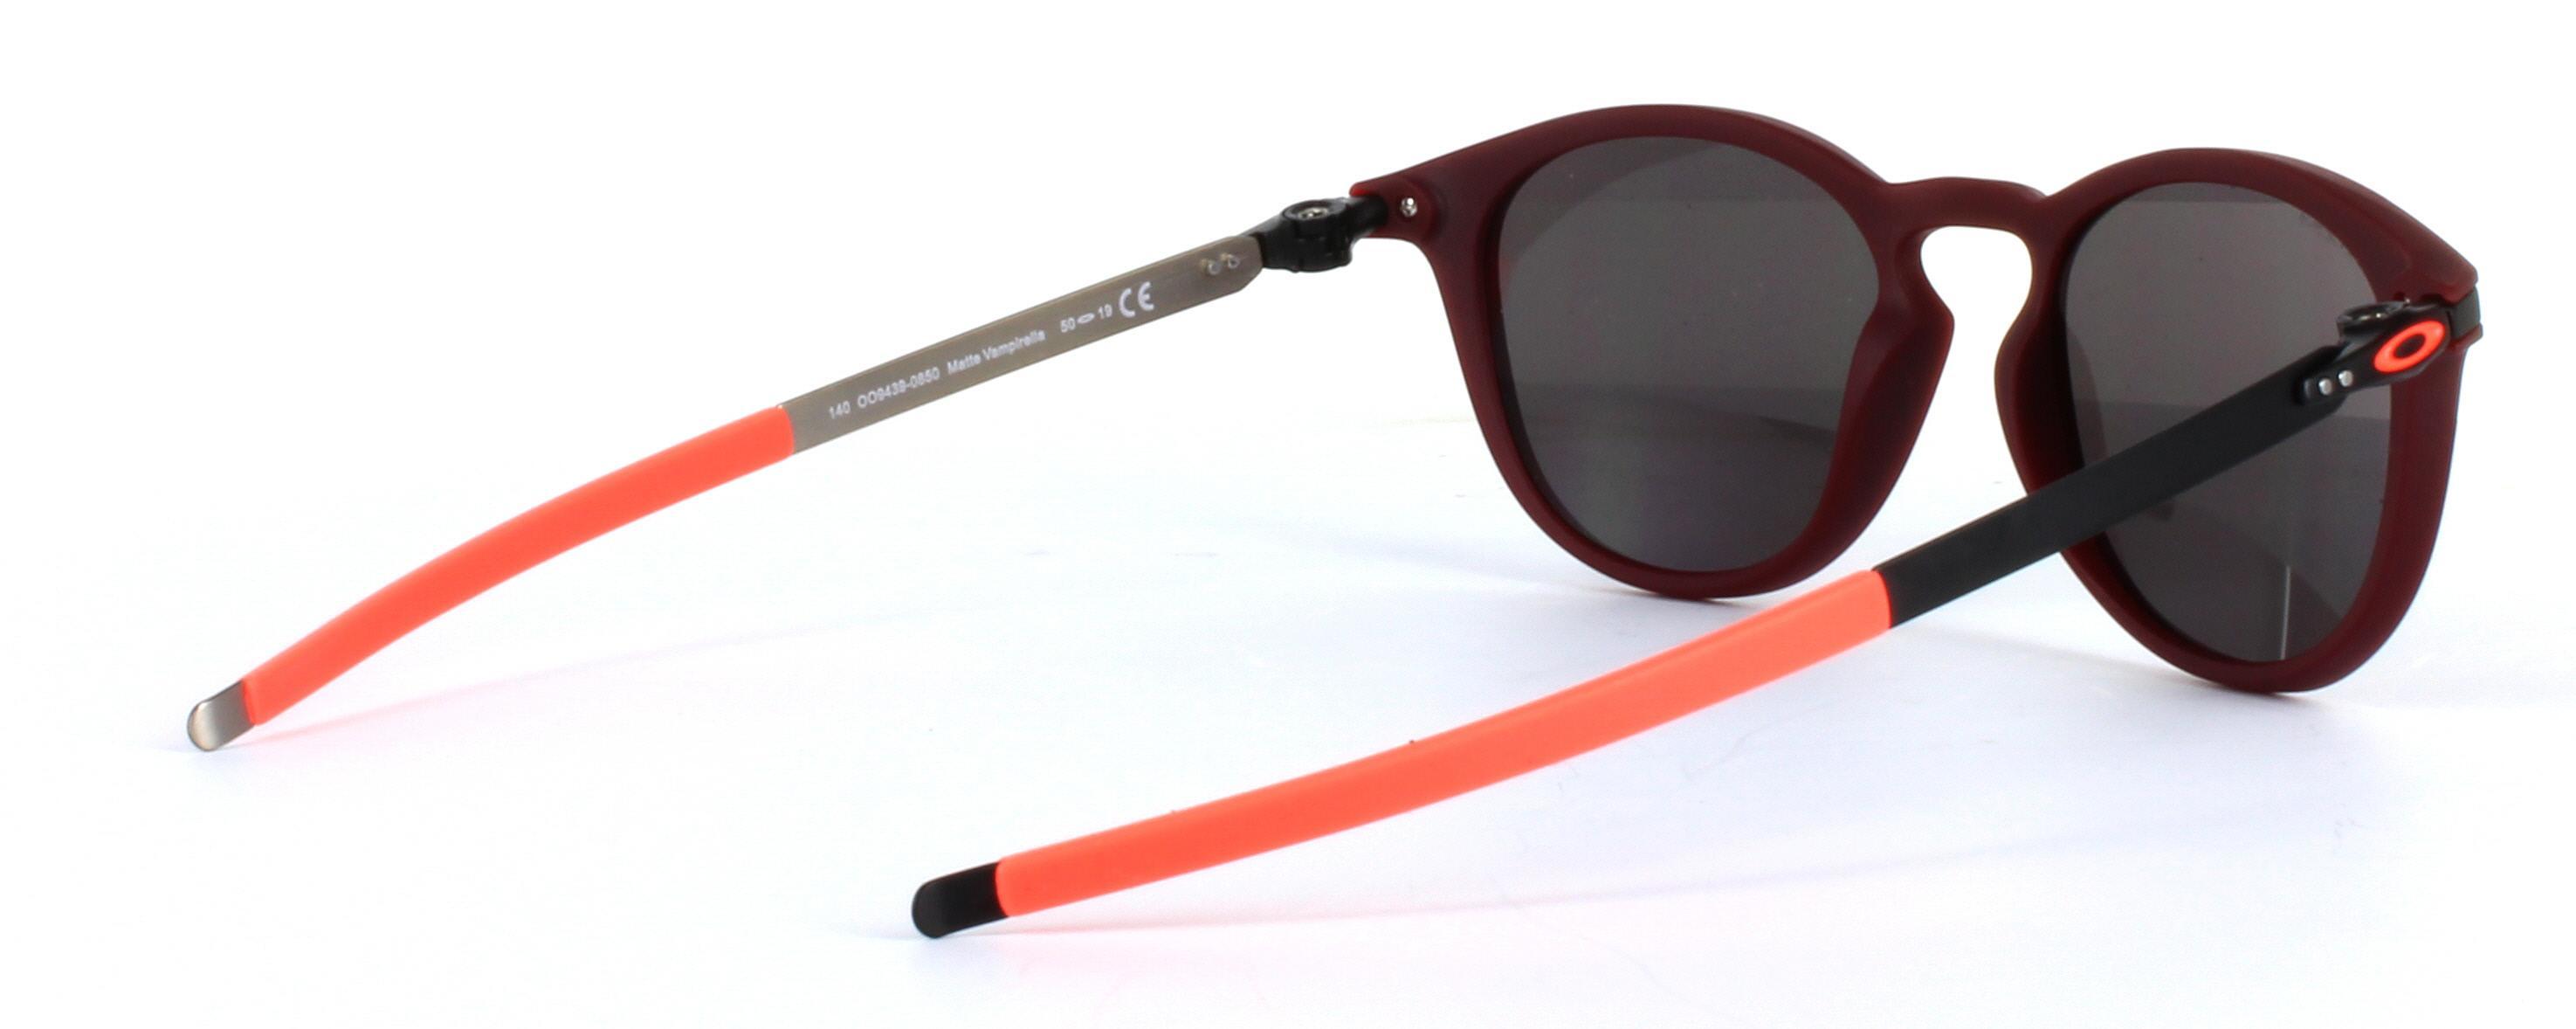 Oakley (O9439) Burgundy Full Rim Plastic Sunglasses - Image View 4